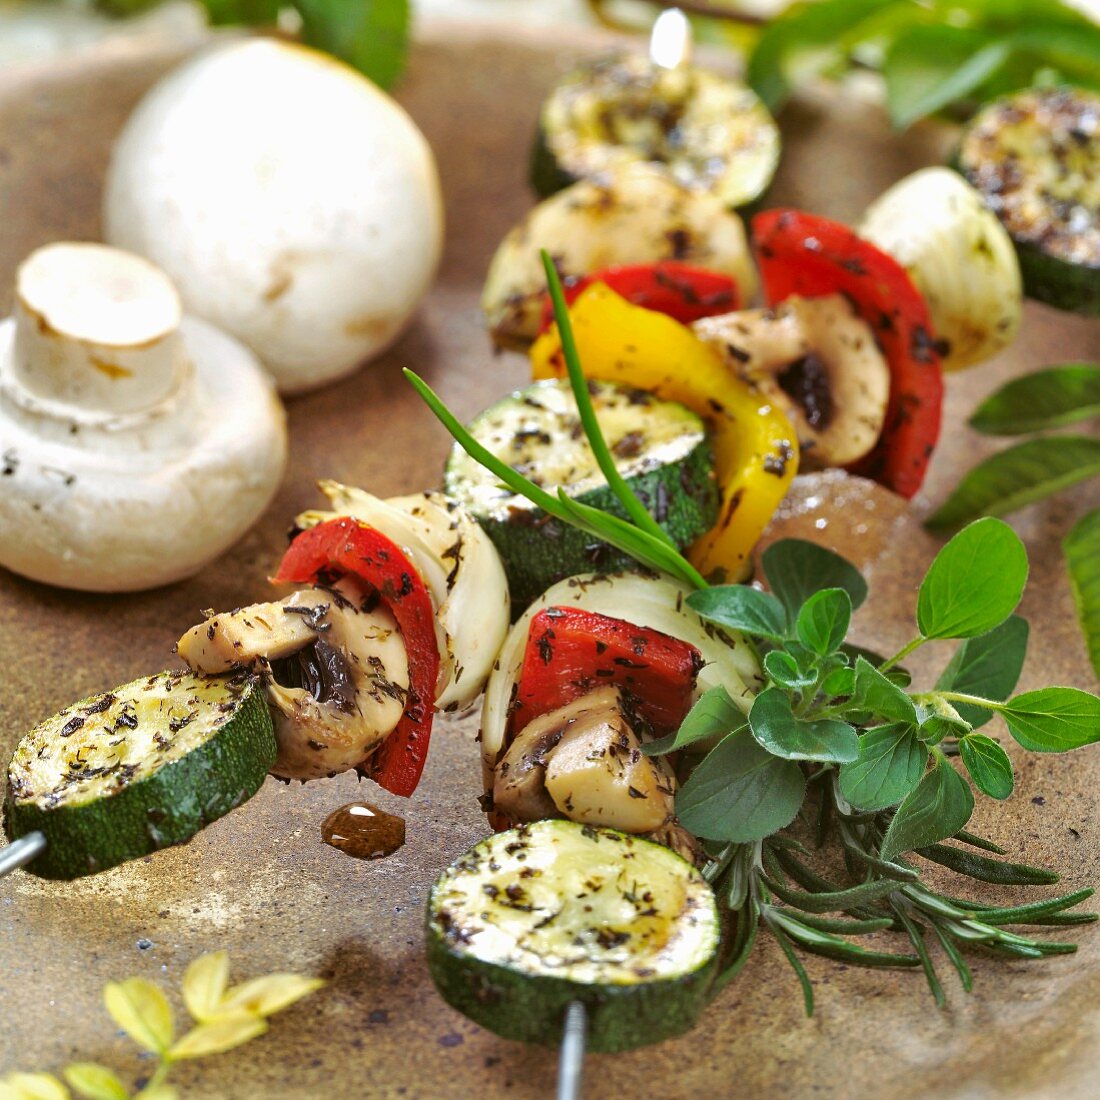 Grilled vegetable kebabs with mushrooms and herbs